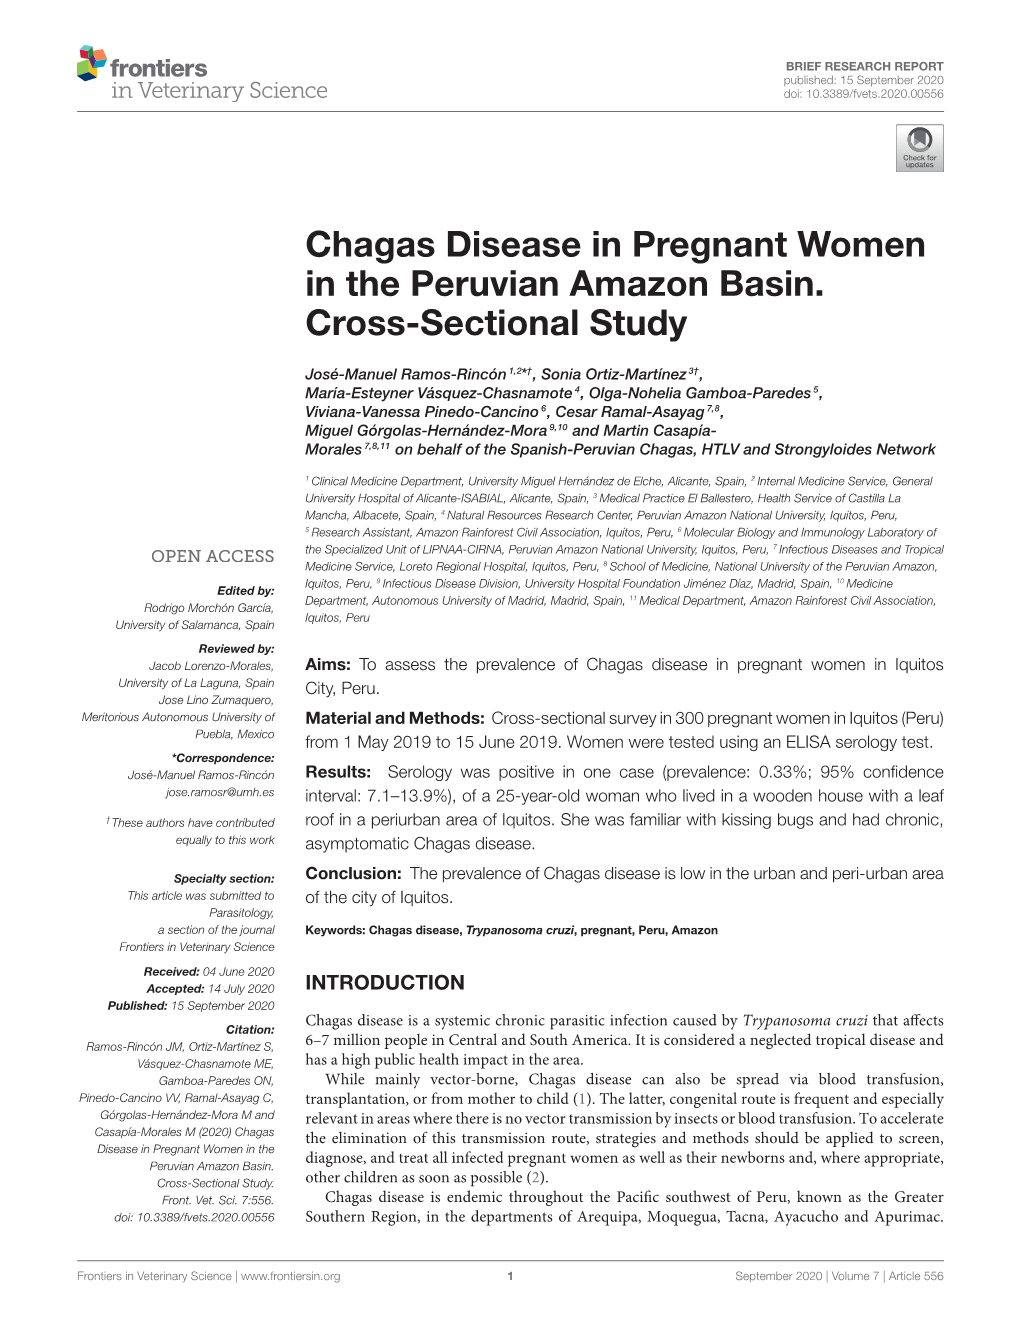 Chagas Disease in Pregnant Women in the Peruvian Amazon Basin